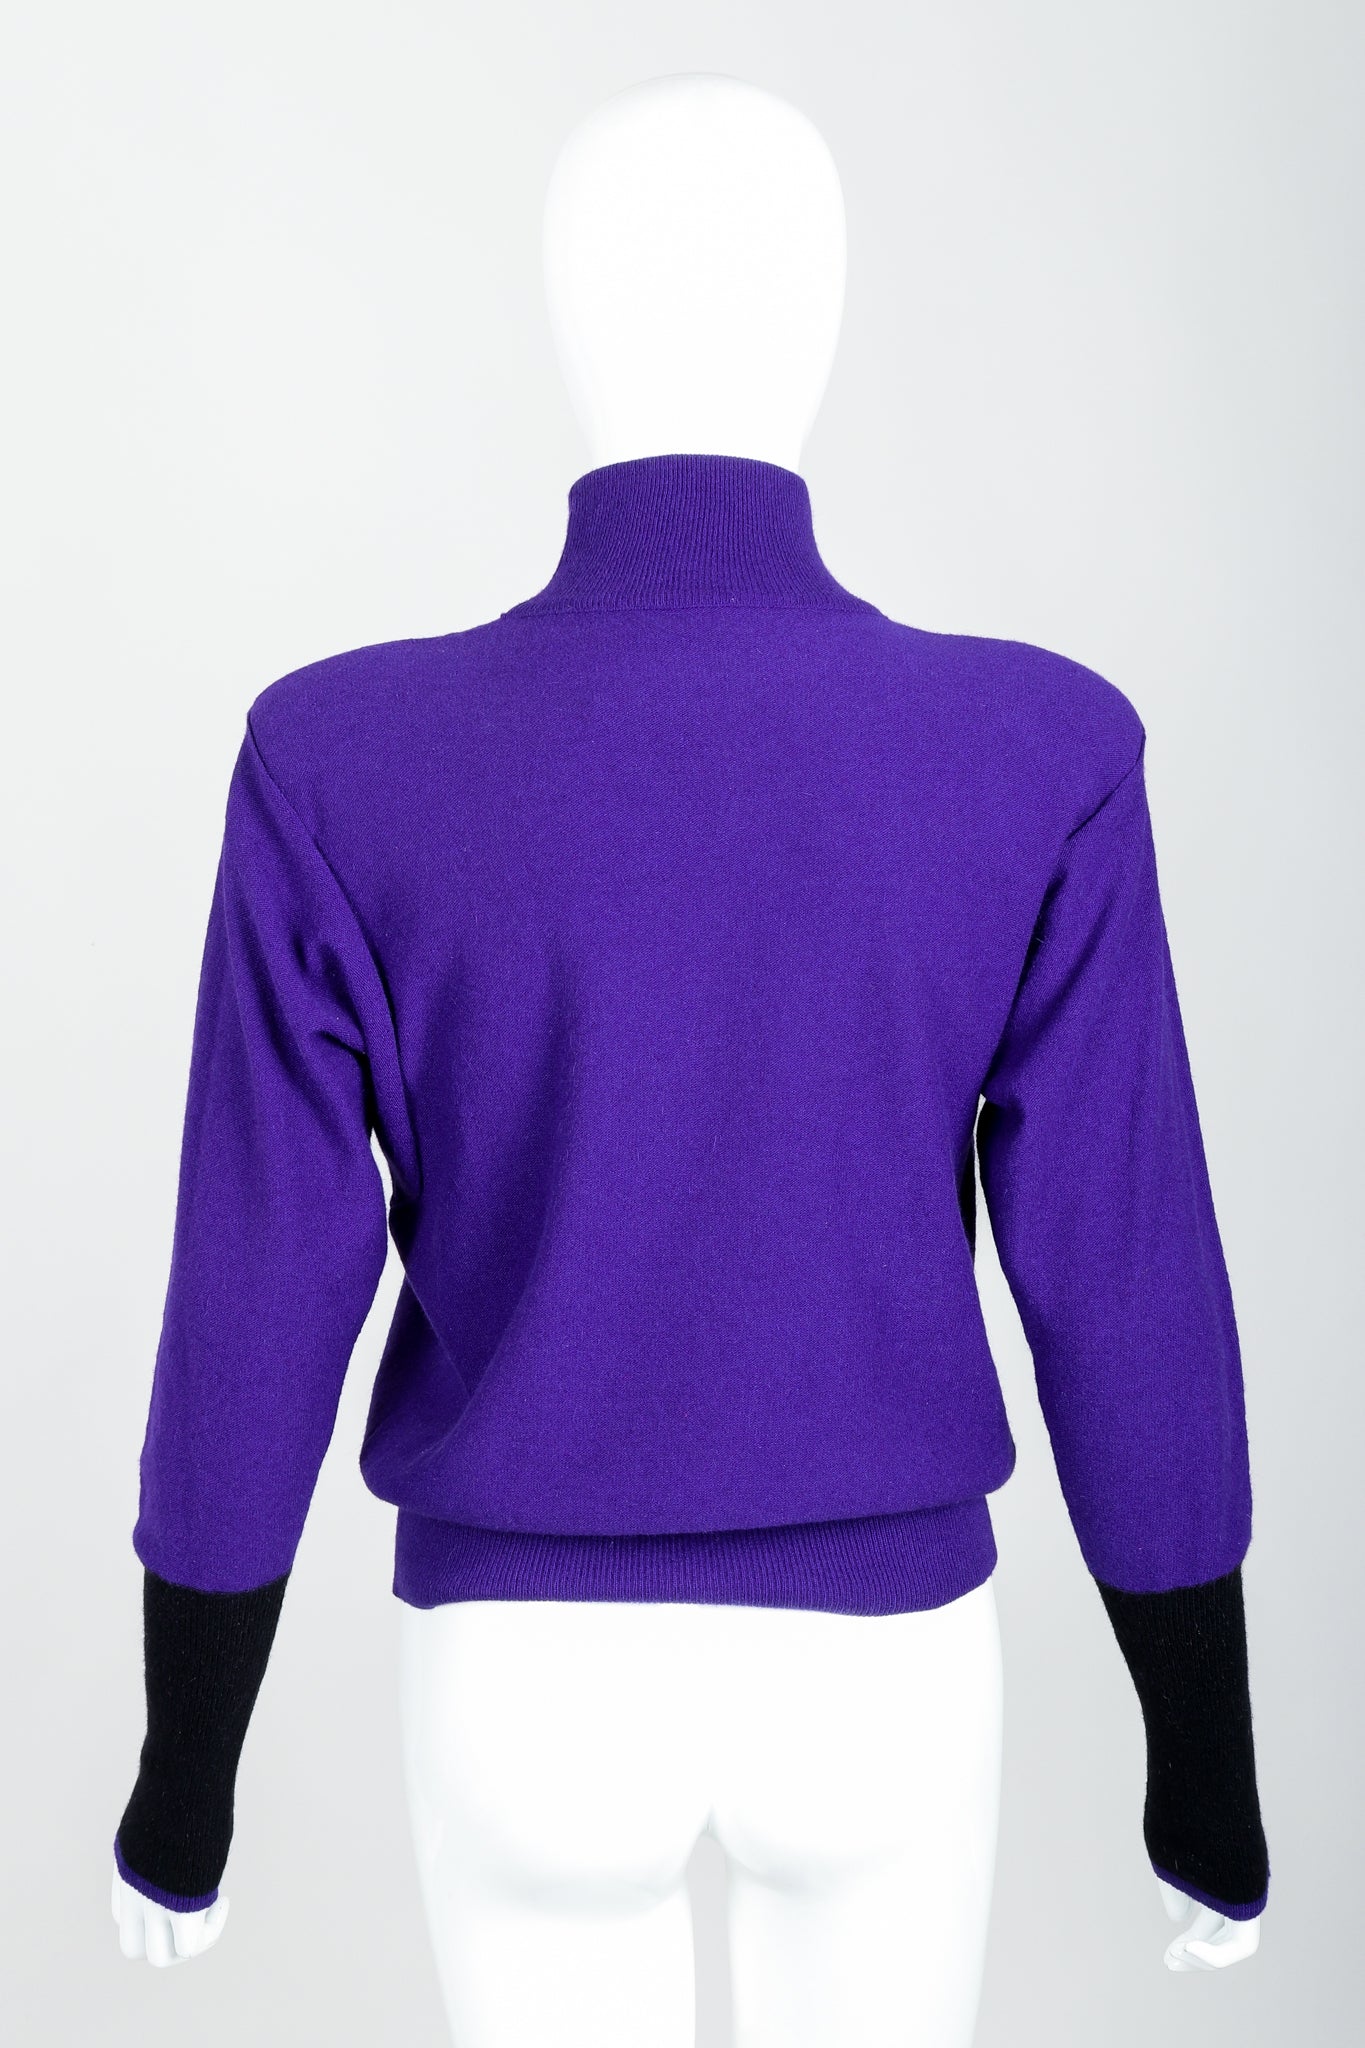 Vintage Sonia Rykiel Purple Knit Turtleneck Sweater on Mannequin Back at Recess